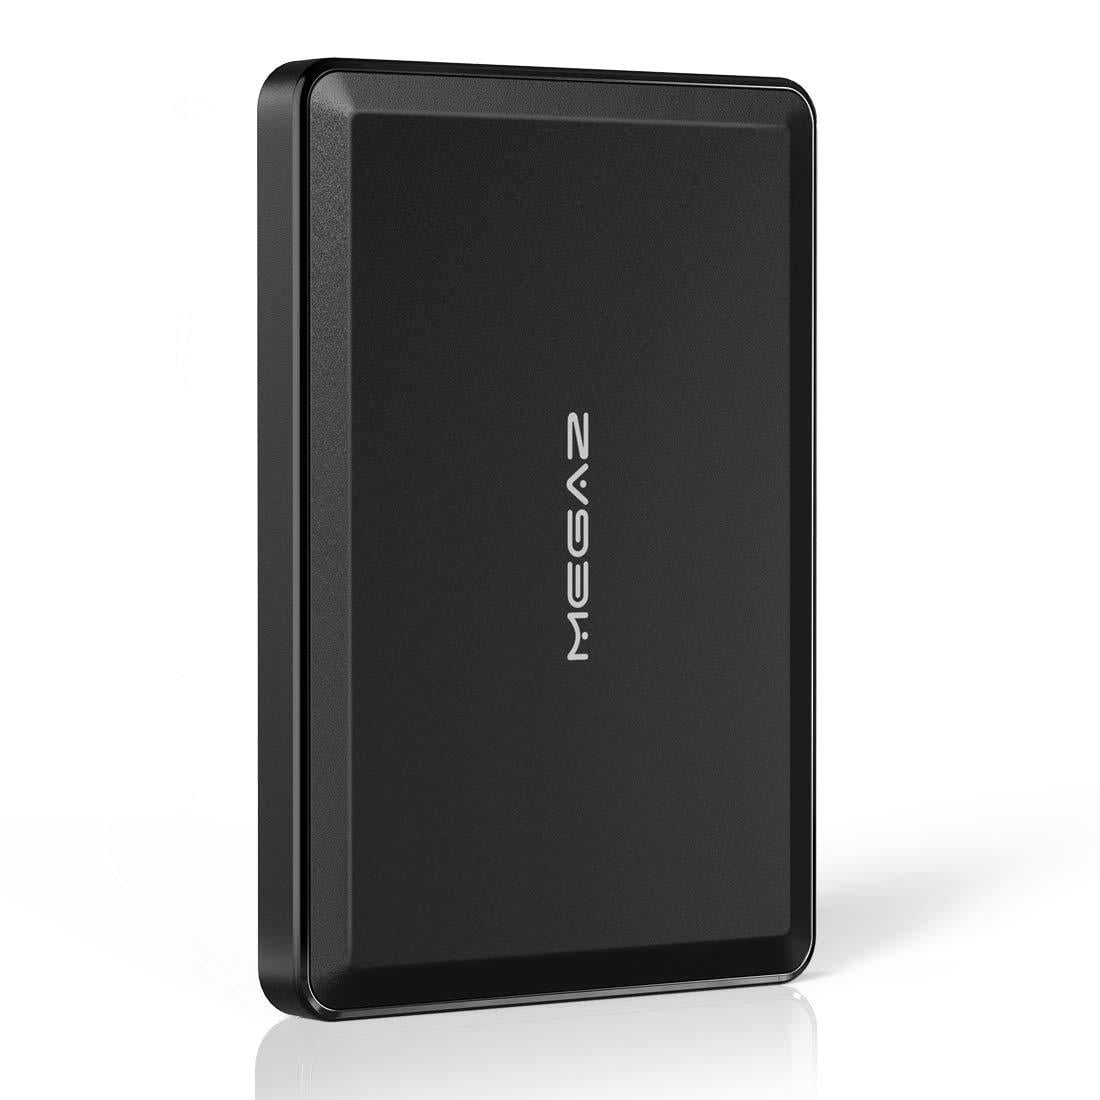 MegaZ Backup Slim 2.5 Portable HDD USB 3.0 for PC 120GB External Hard Drive Mac Laptop Chromebook 3 Year Warranty 